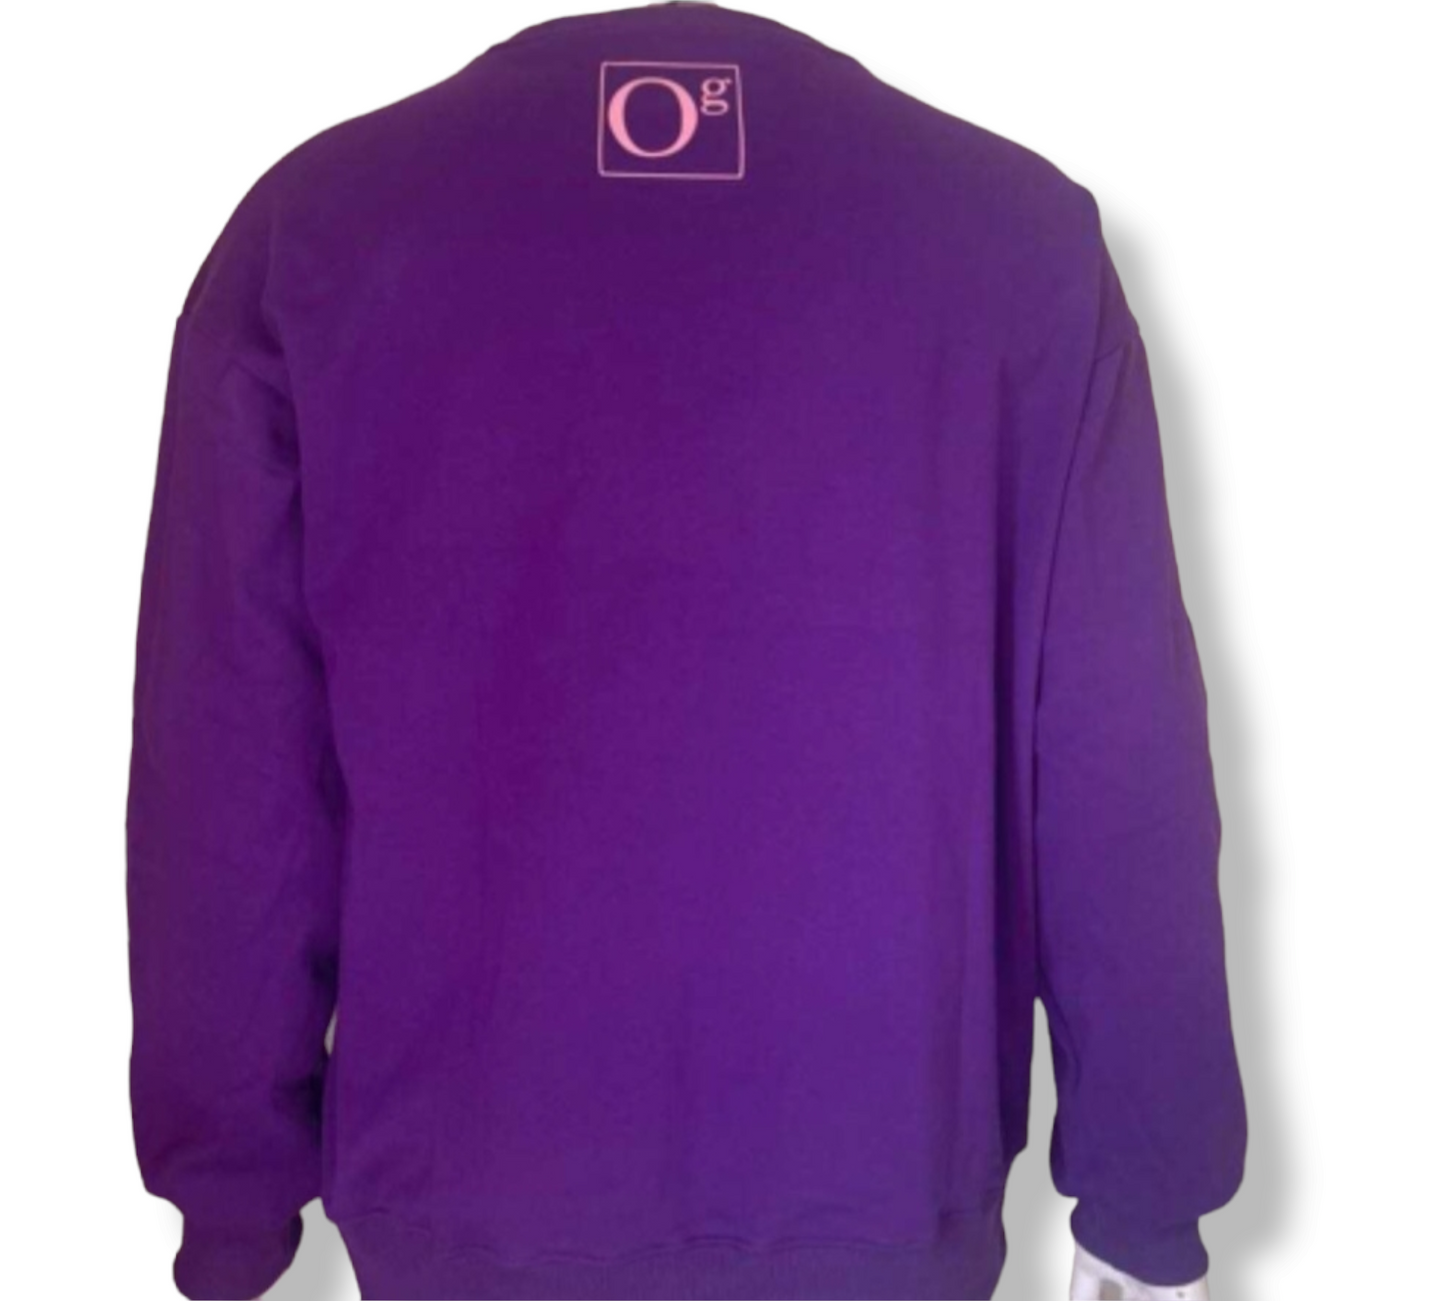 oG Signature Sweatshirt Purple/Soft Pink